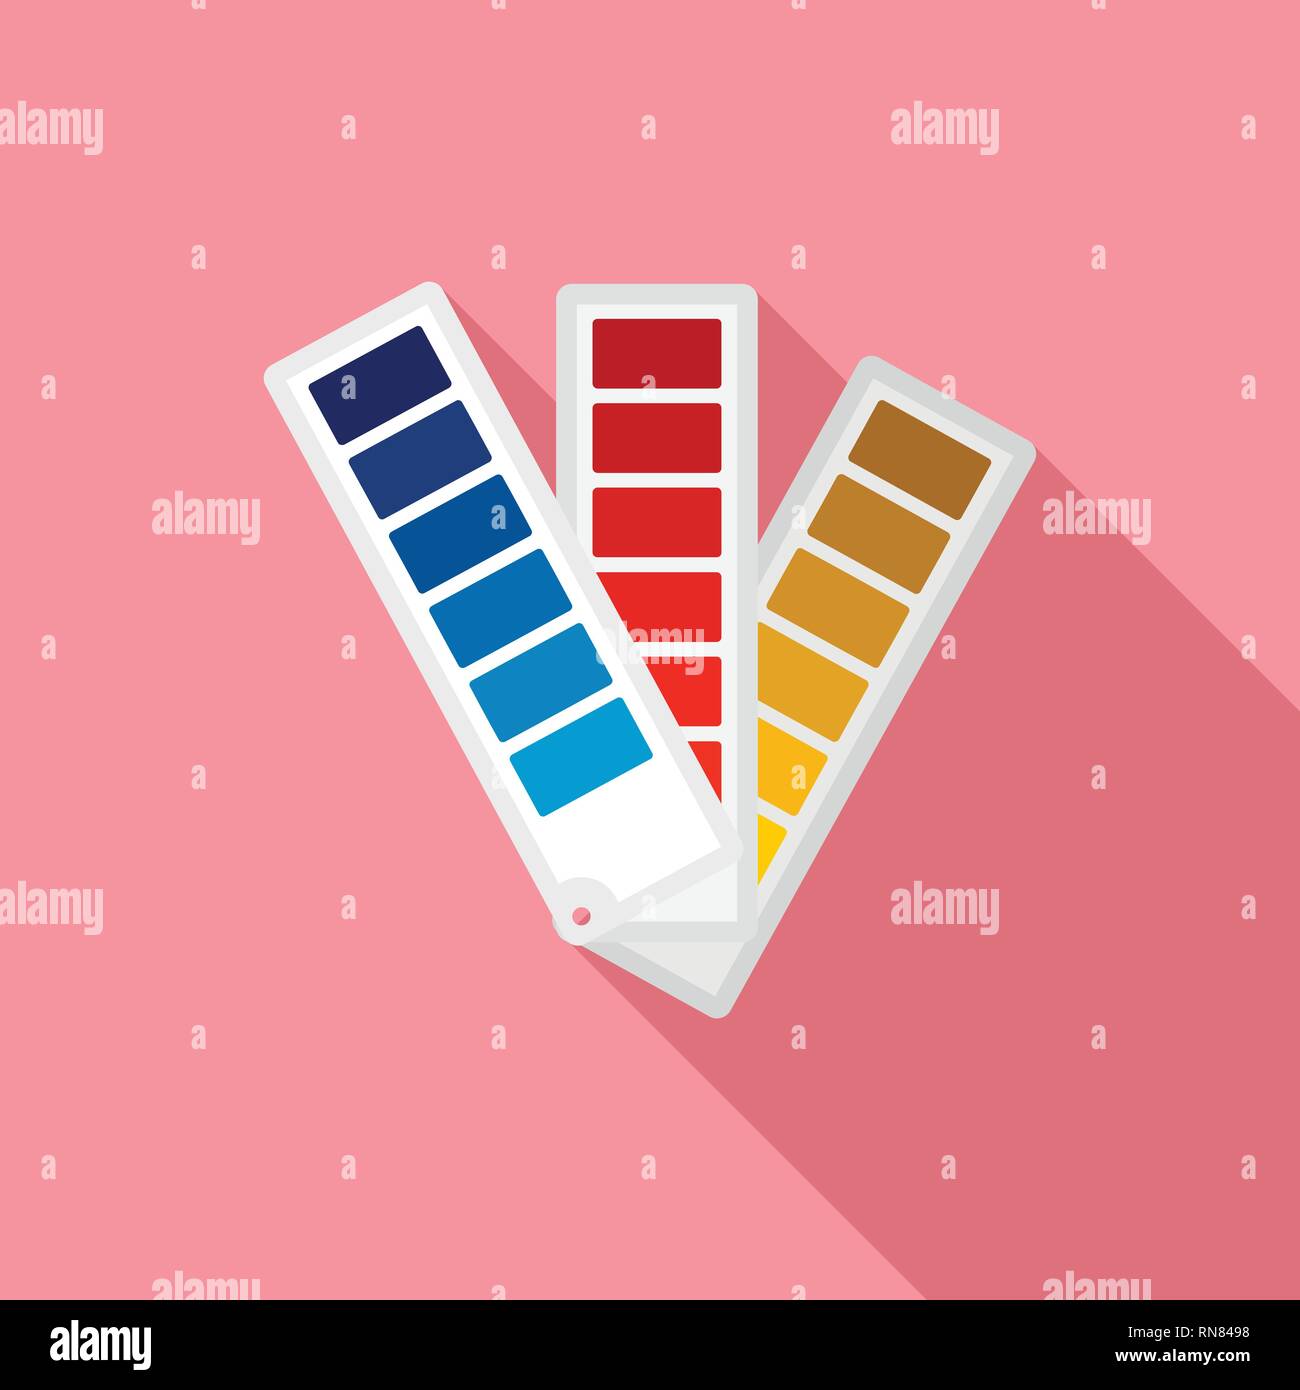 Web Font Color Chart